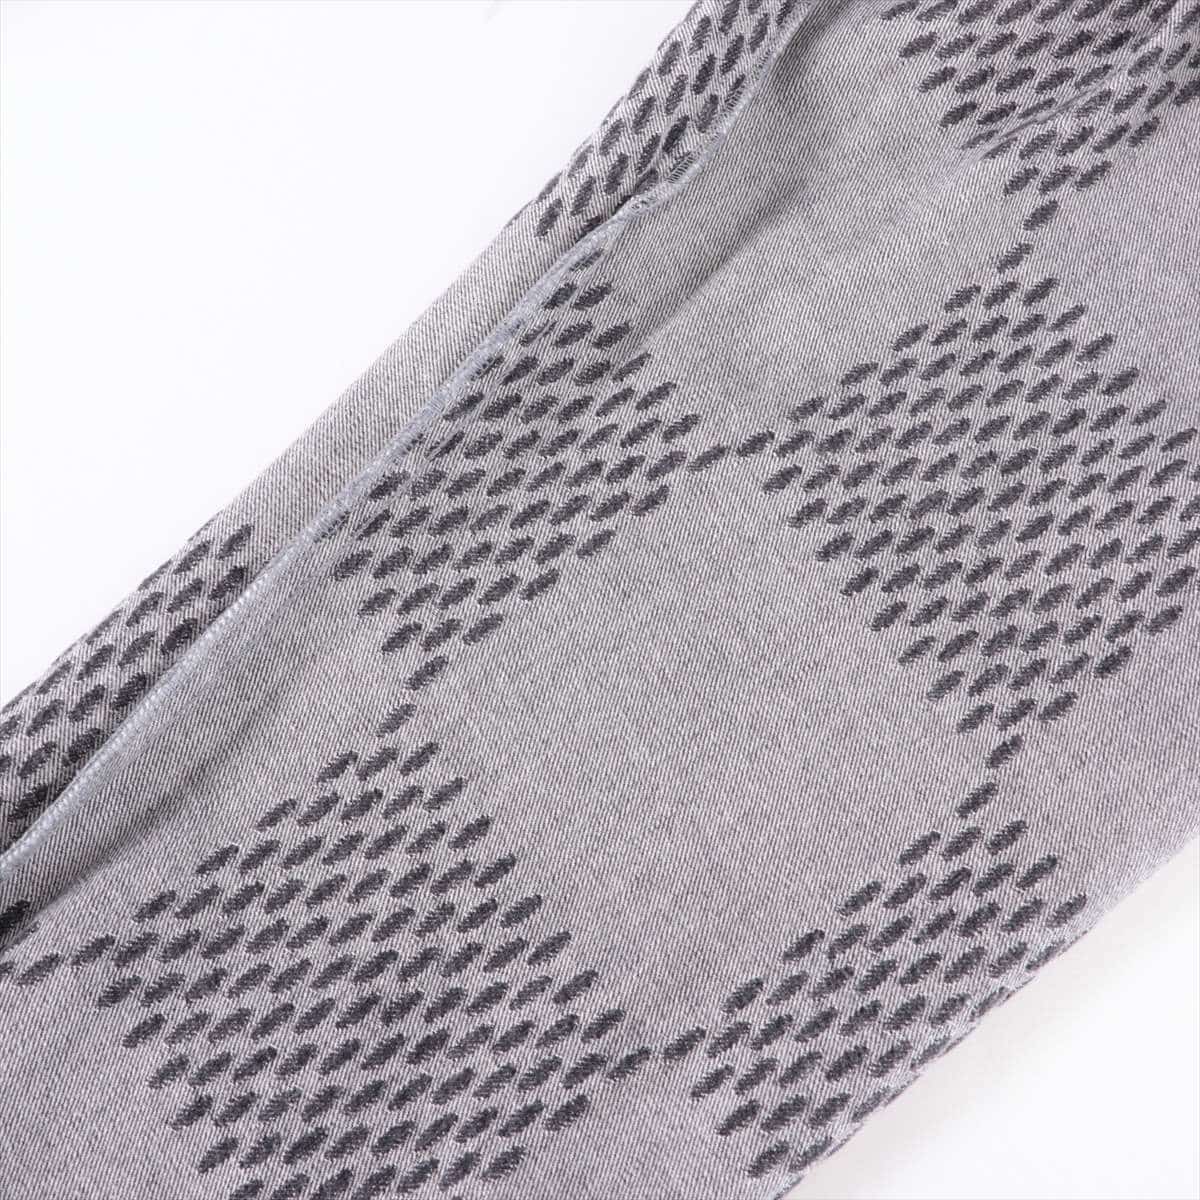 Louis Vuitton x NIGO HJD11 Cotton Denim pants 29 Men's Grey  giant damier waves monogram